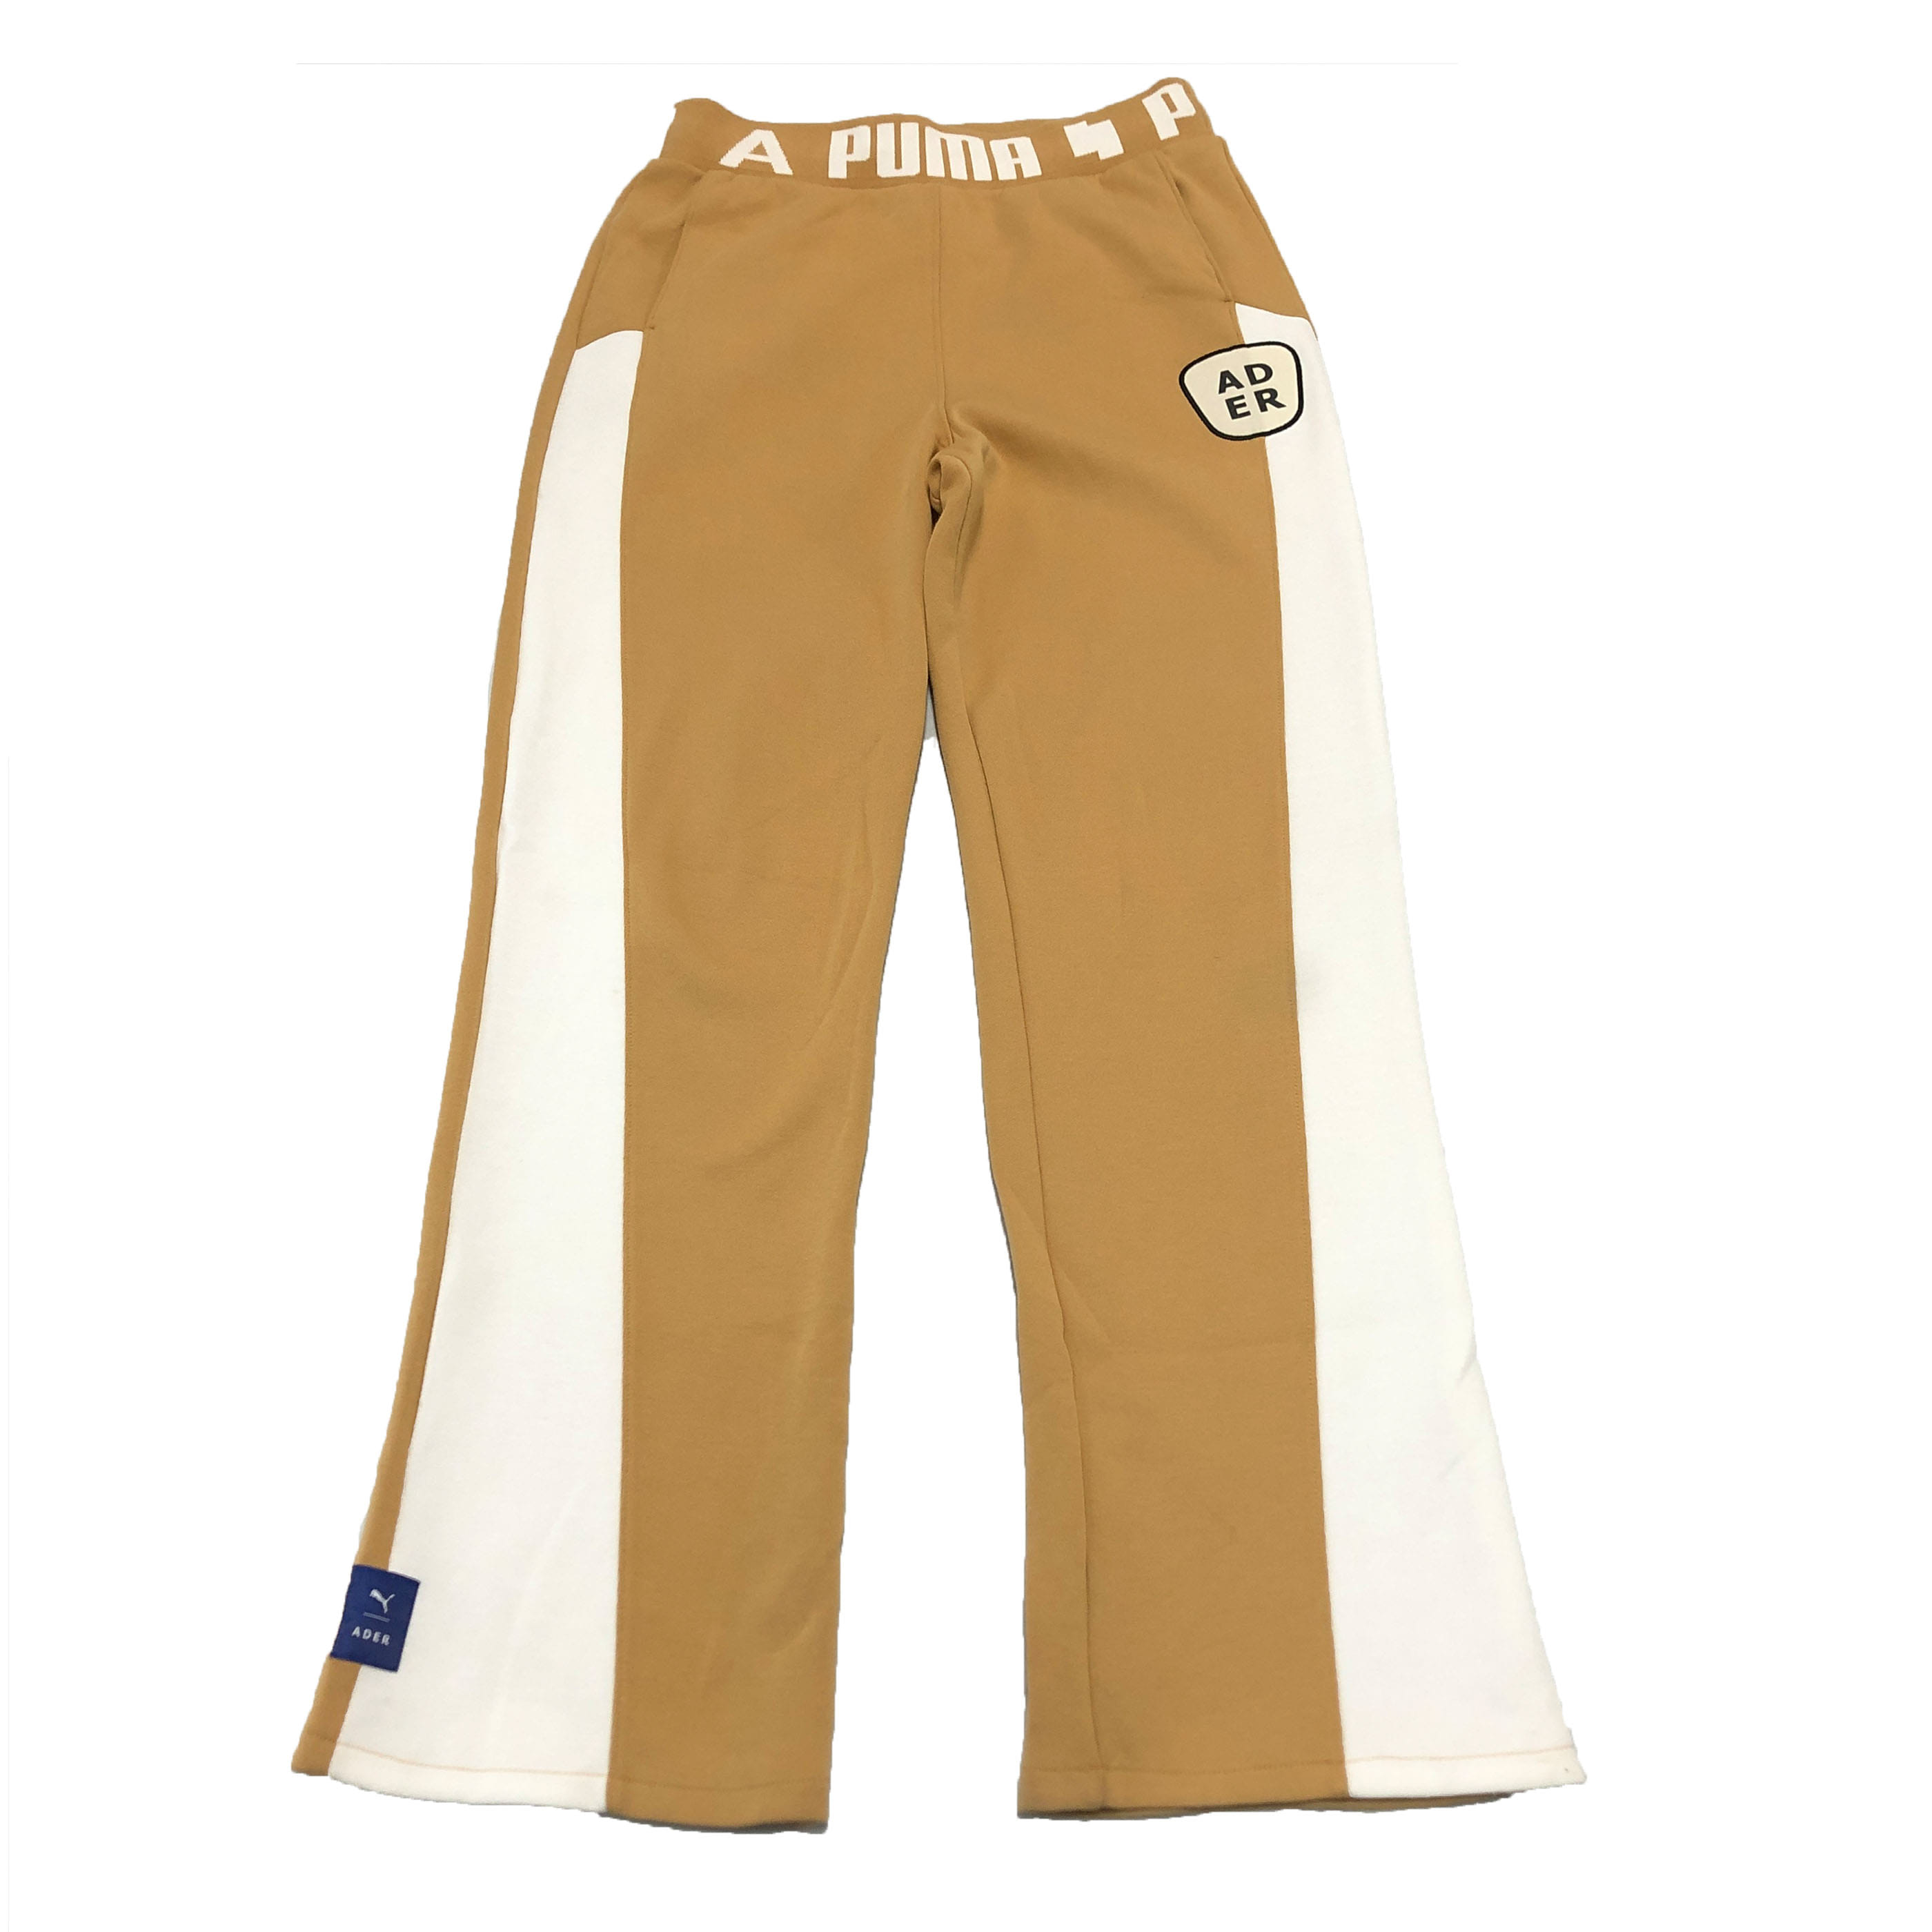 [Puma x ADER error] Brown Pants - Size S